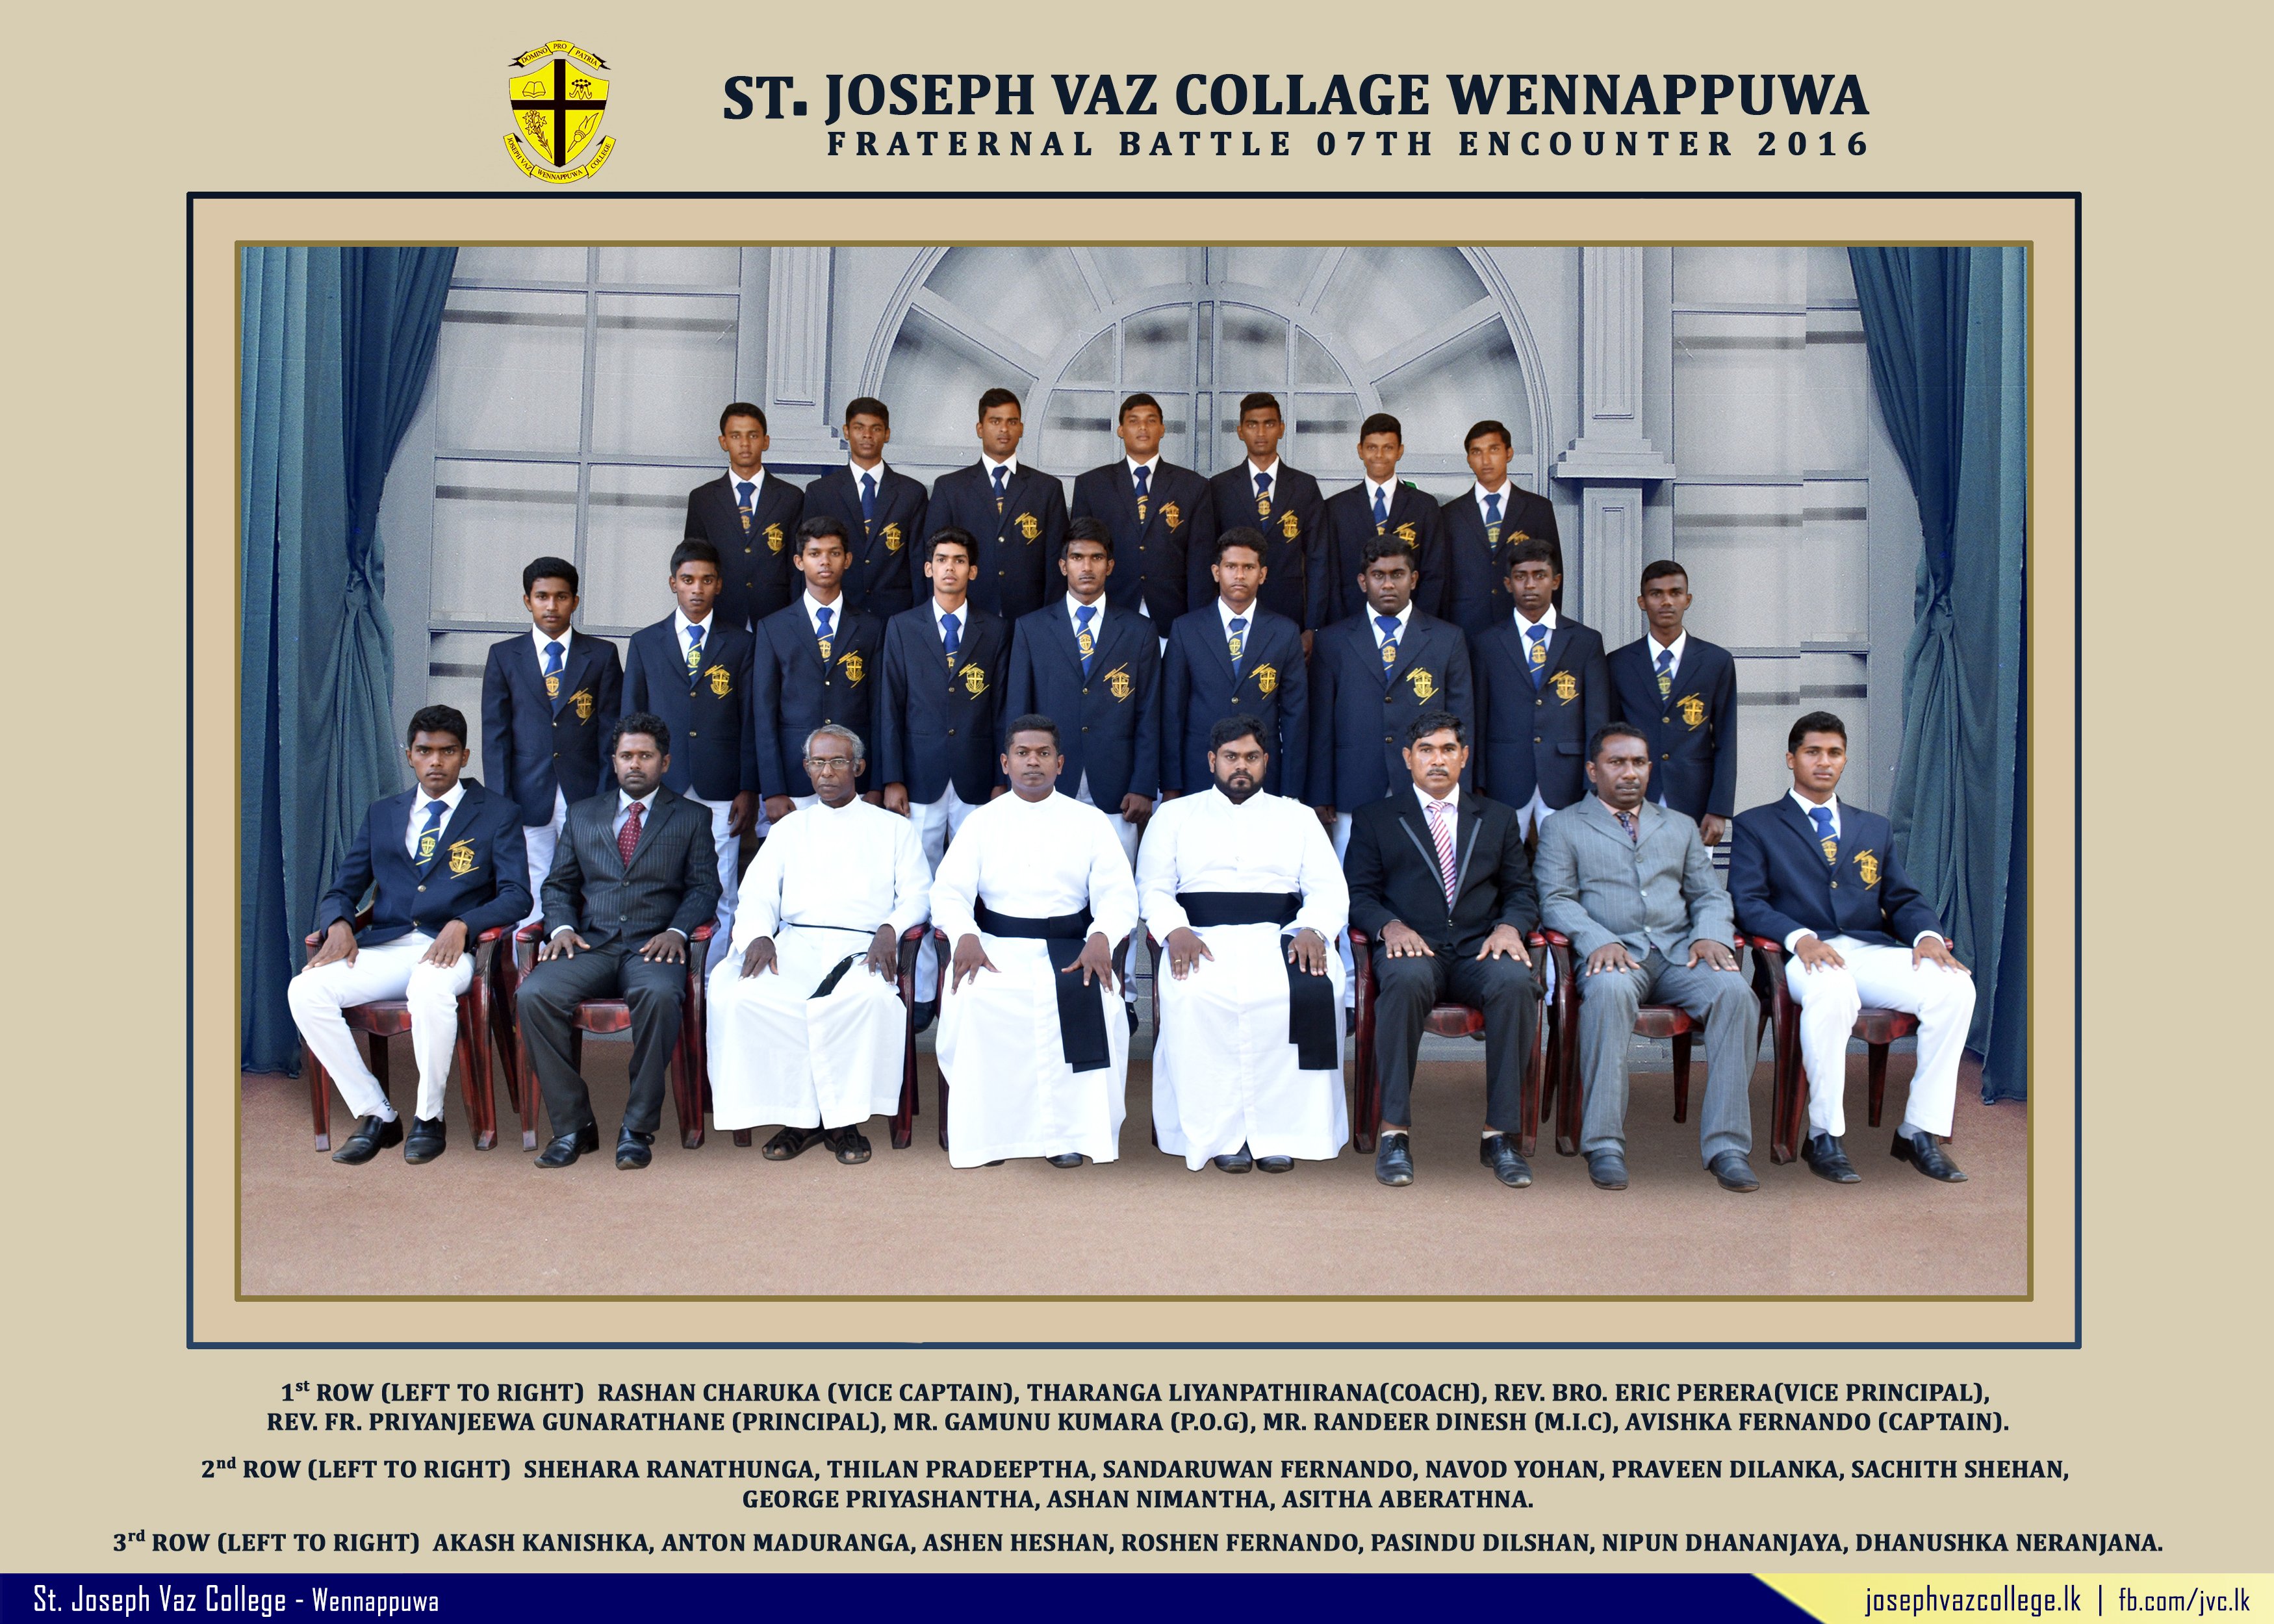 Fraternal Battle - 2016 - Day 2 - St. Joseph Vaz College - Wennappuwa